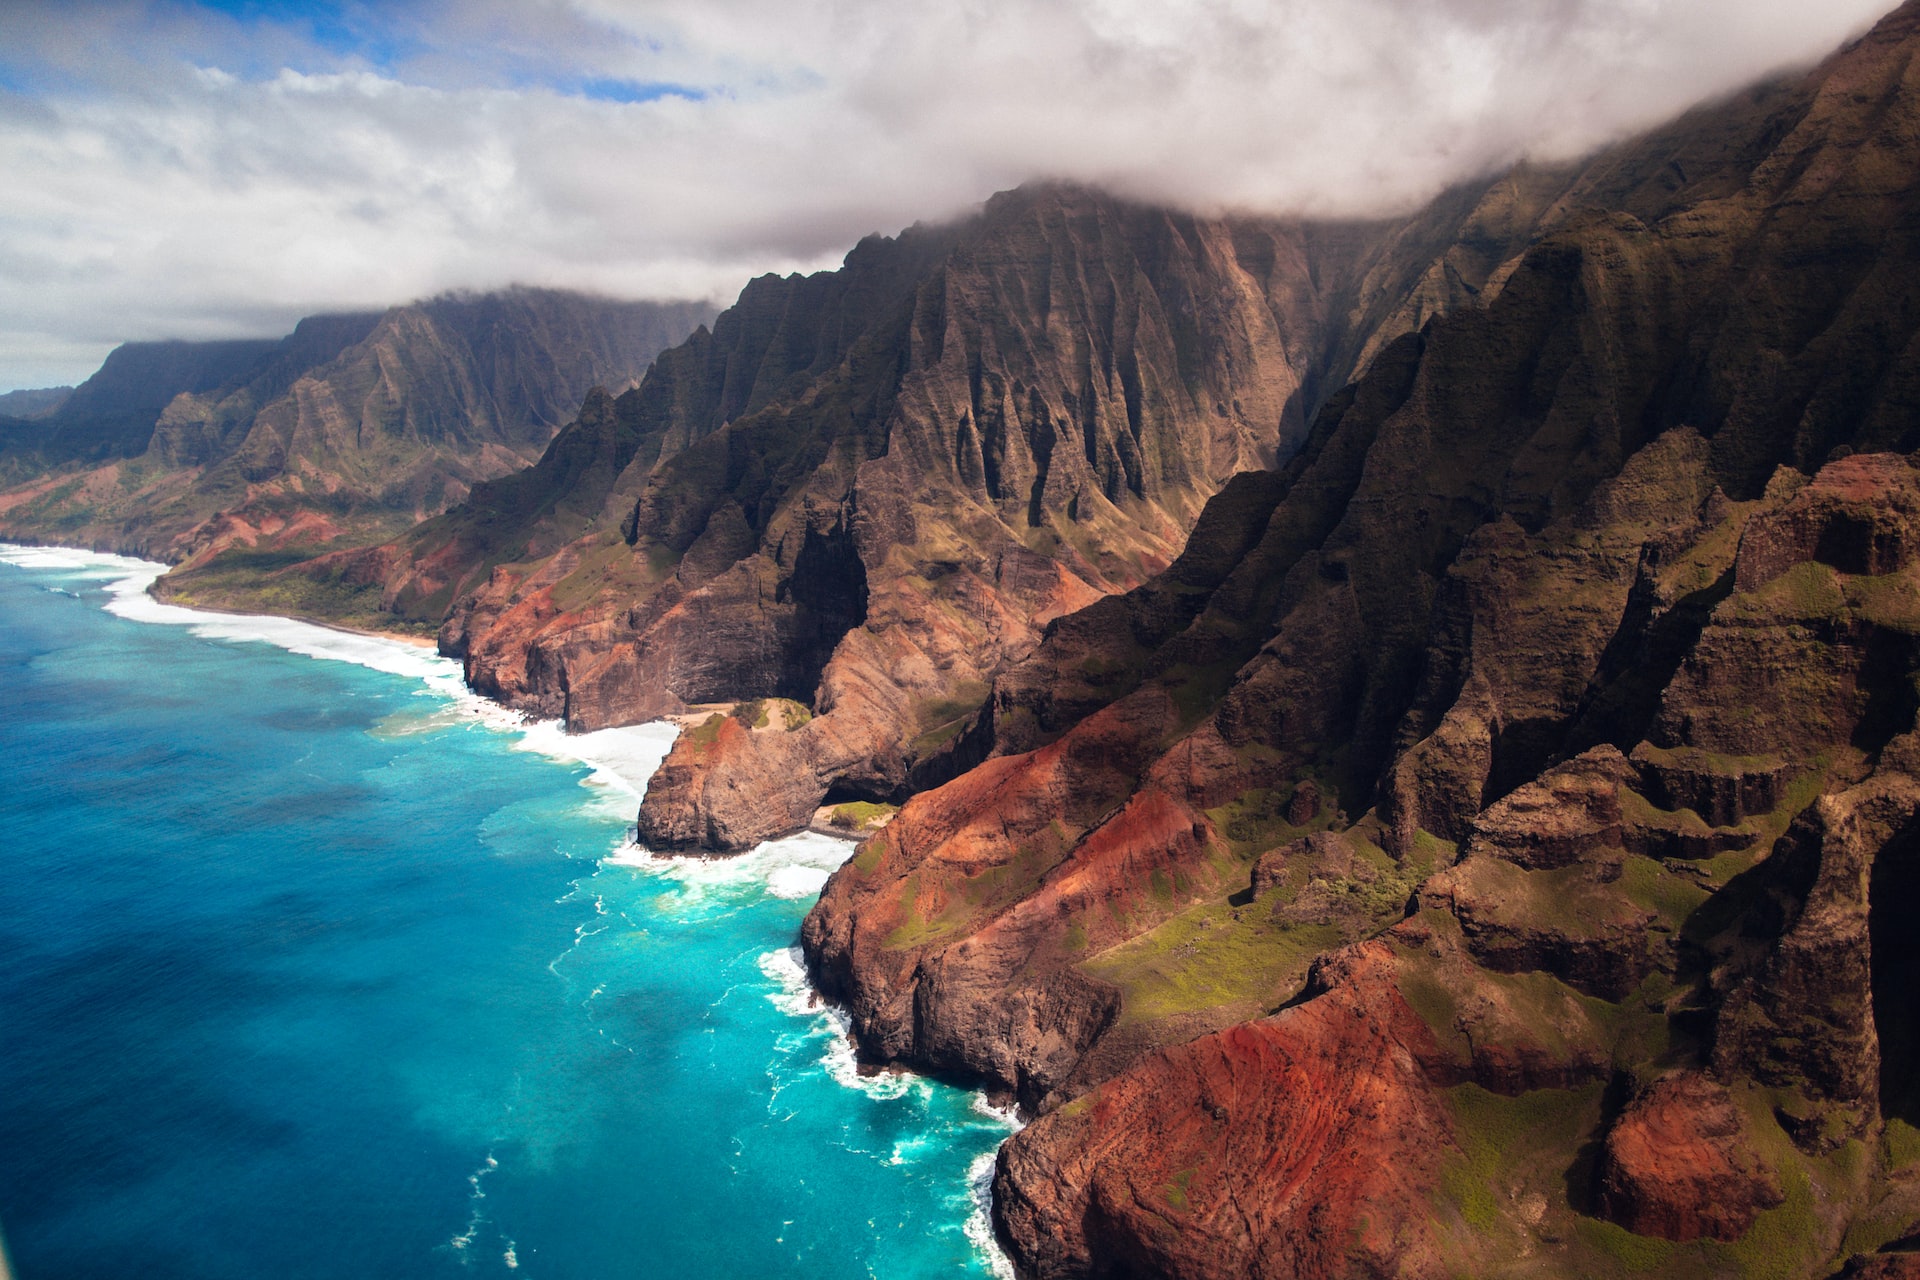 Take a glimpse of rocky cliffs and brilliant blue sea in Hawaii
